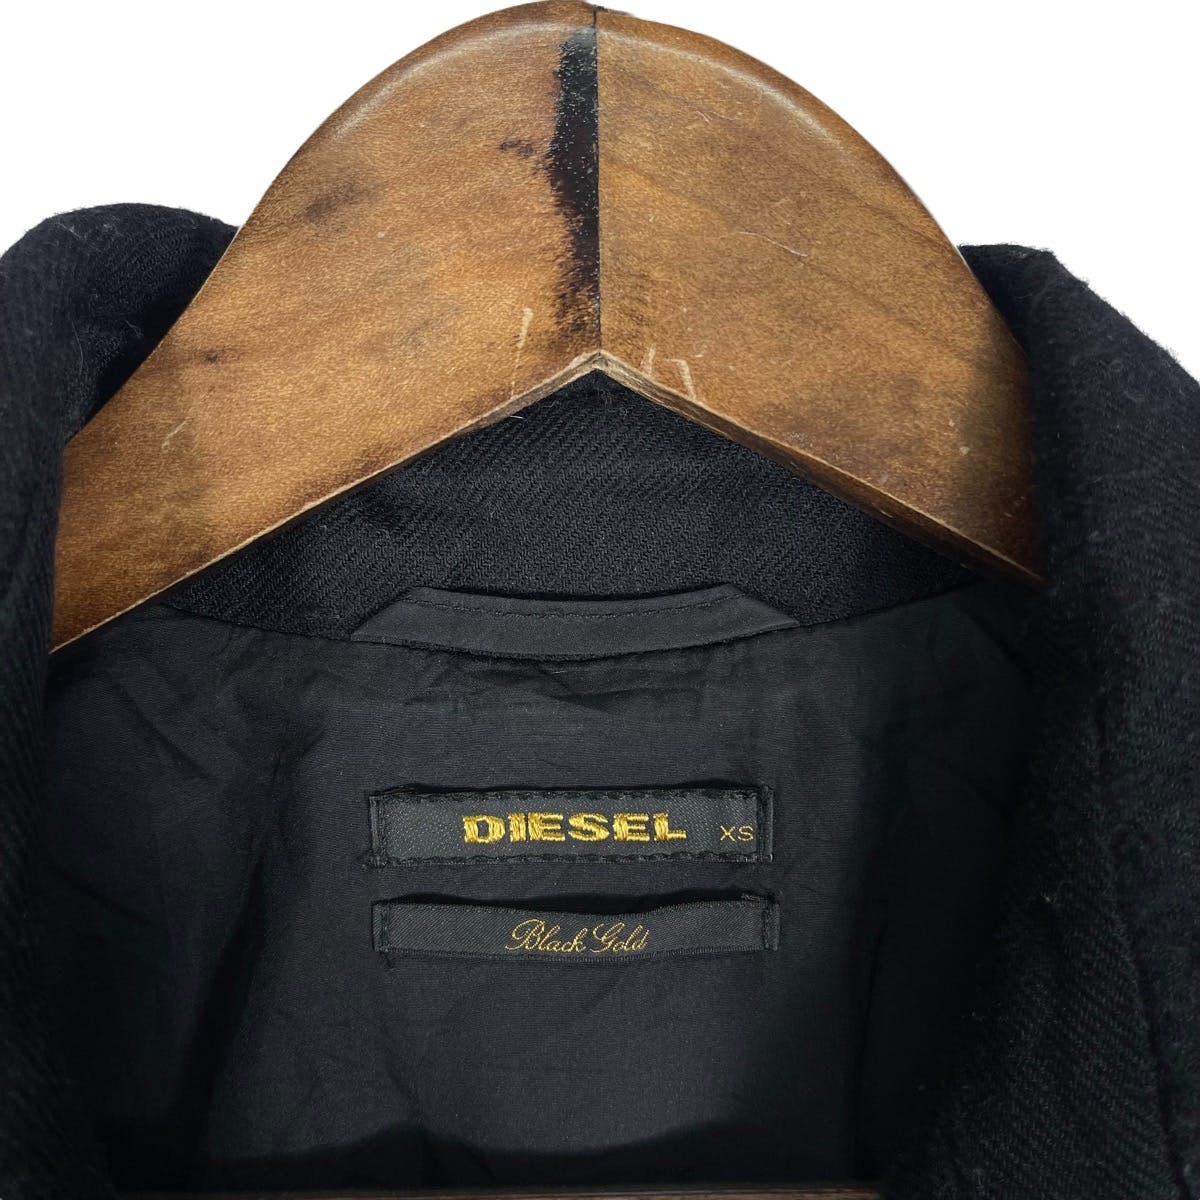 Diesel Black Gold Double Breasted Coat Jacket - 7